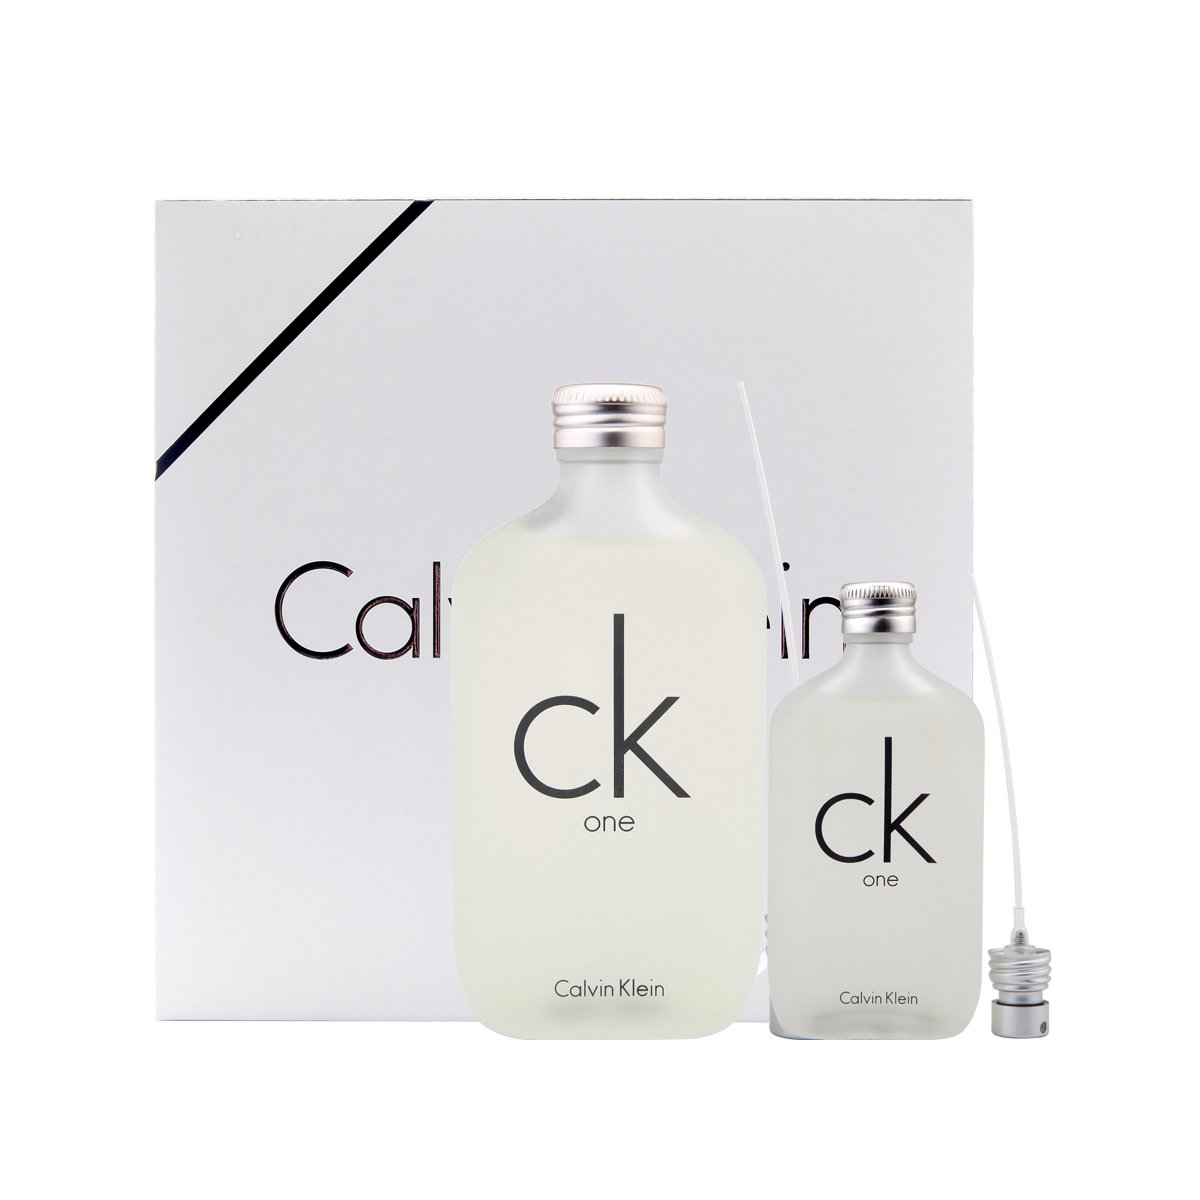 CALVIN KLEIN - CK One para hombre y mujer / SET - 200 ml Eau De Toilette Spray + 50 ml Eau de Toliette Spray